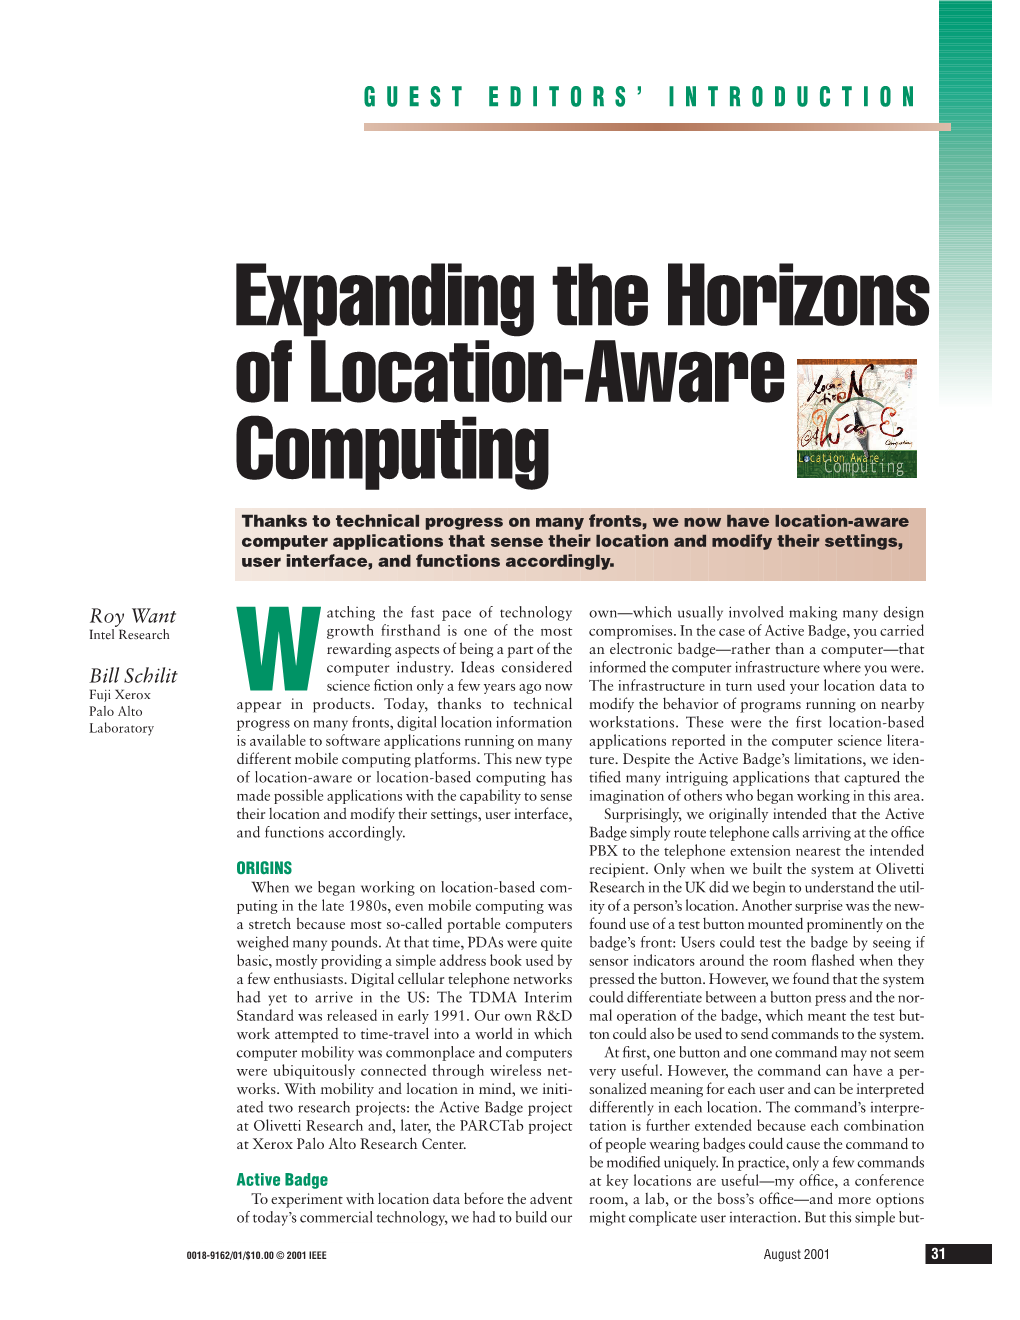 Expanding the Horizons of Location-Aware Computing